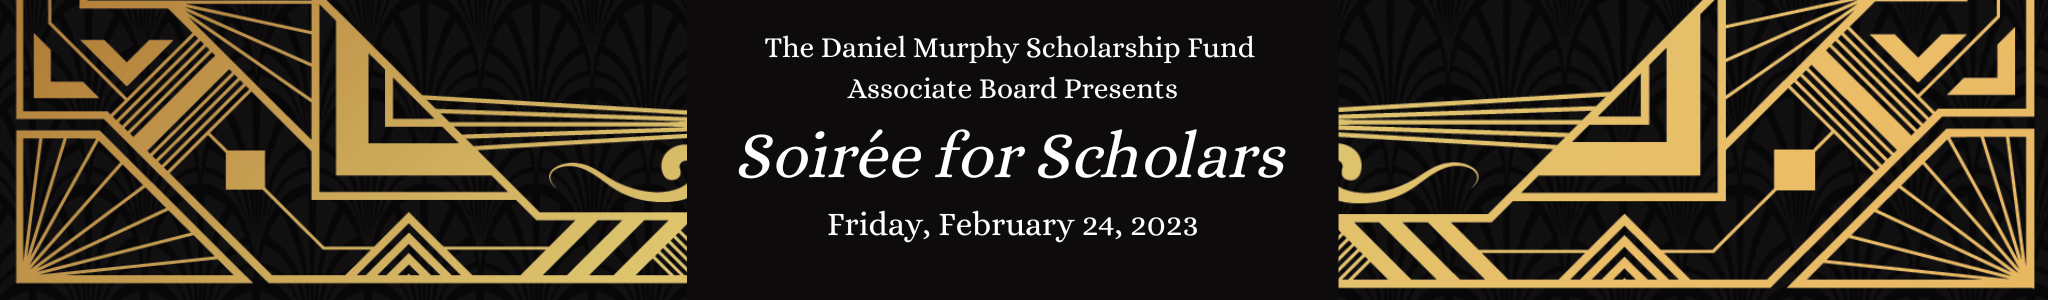 Daniel Murphy Scholarship Fund (DMSF) - Profile